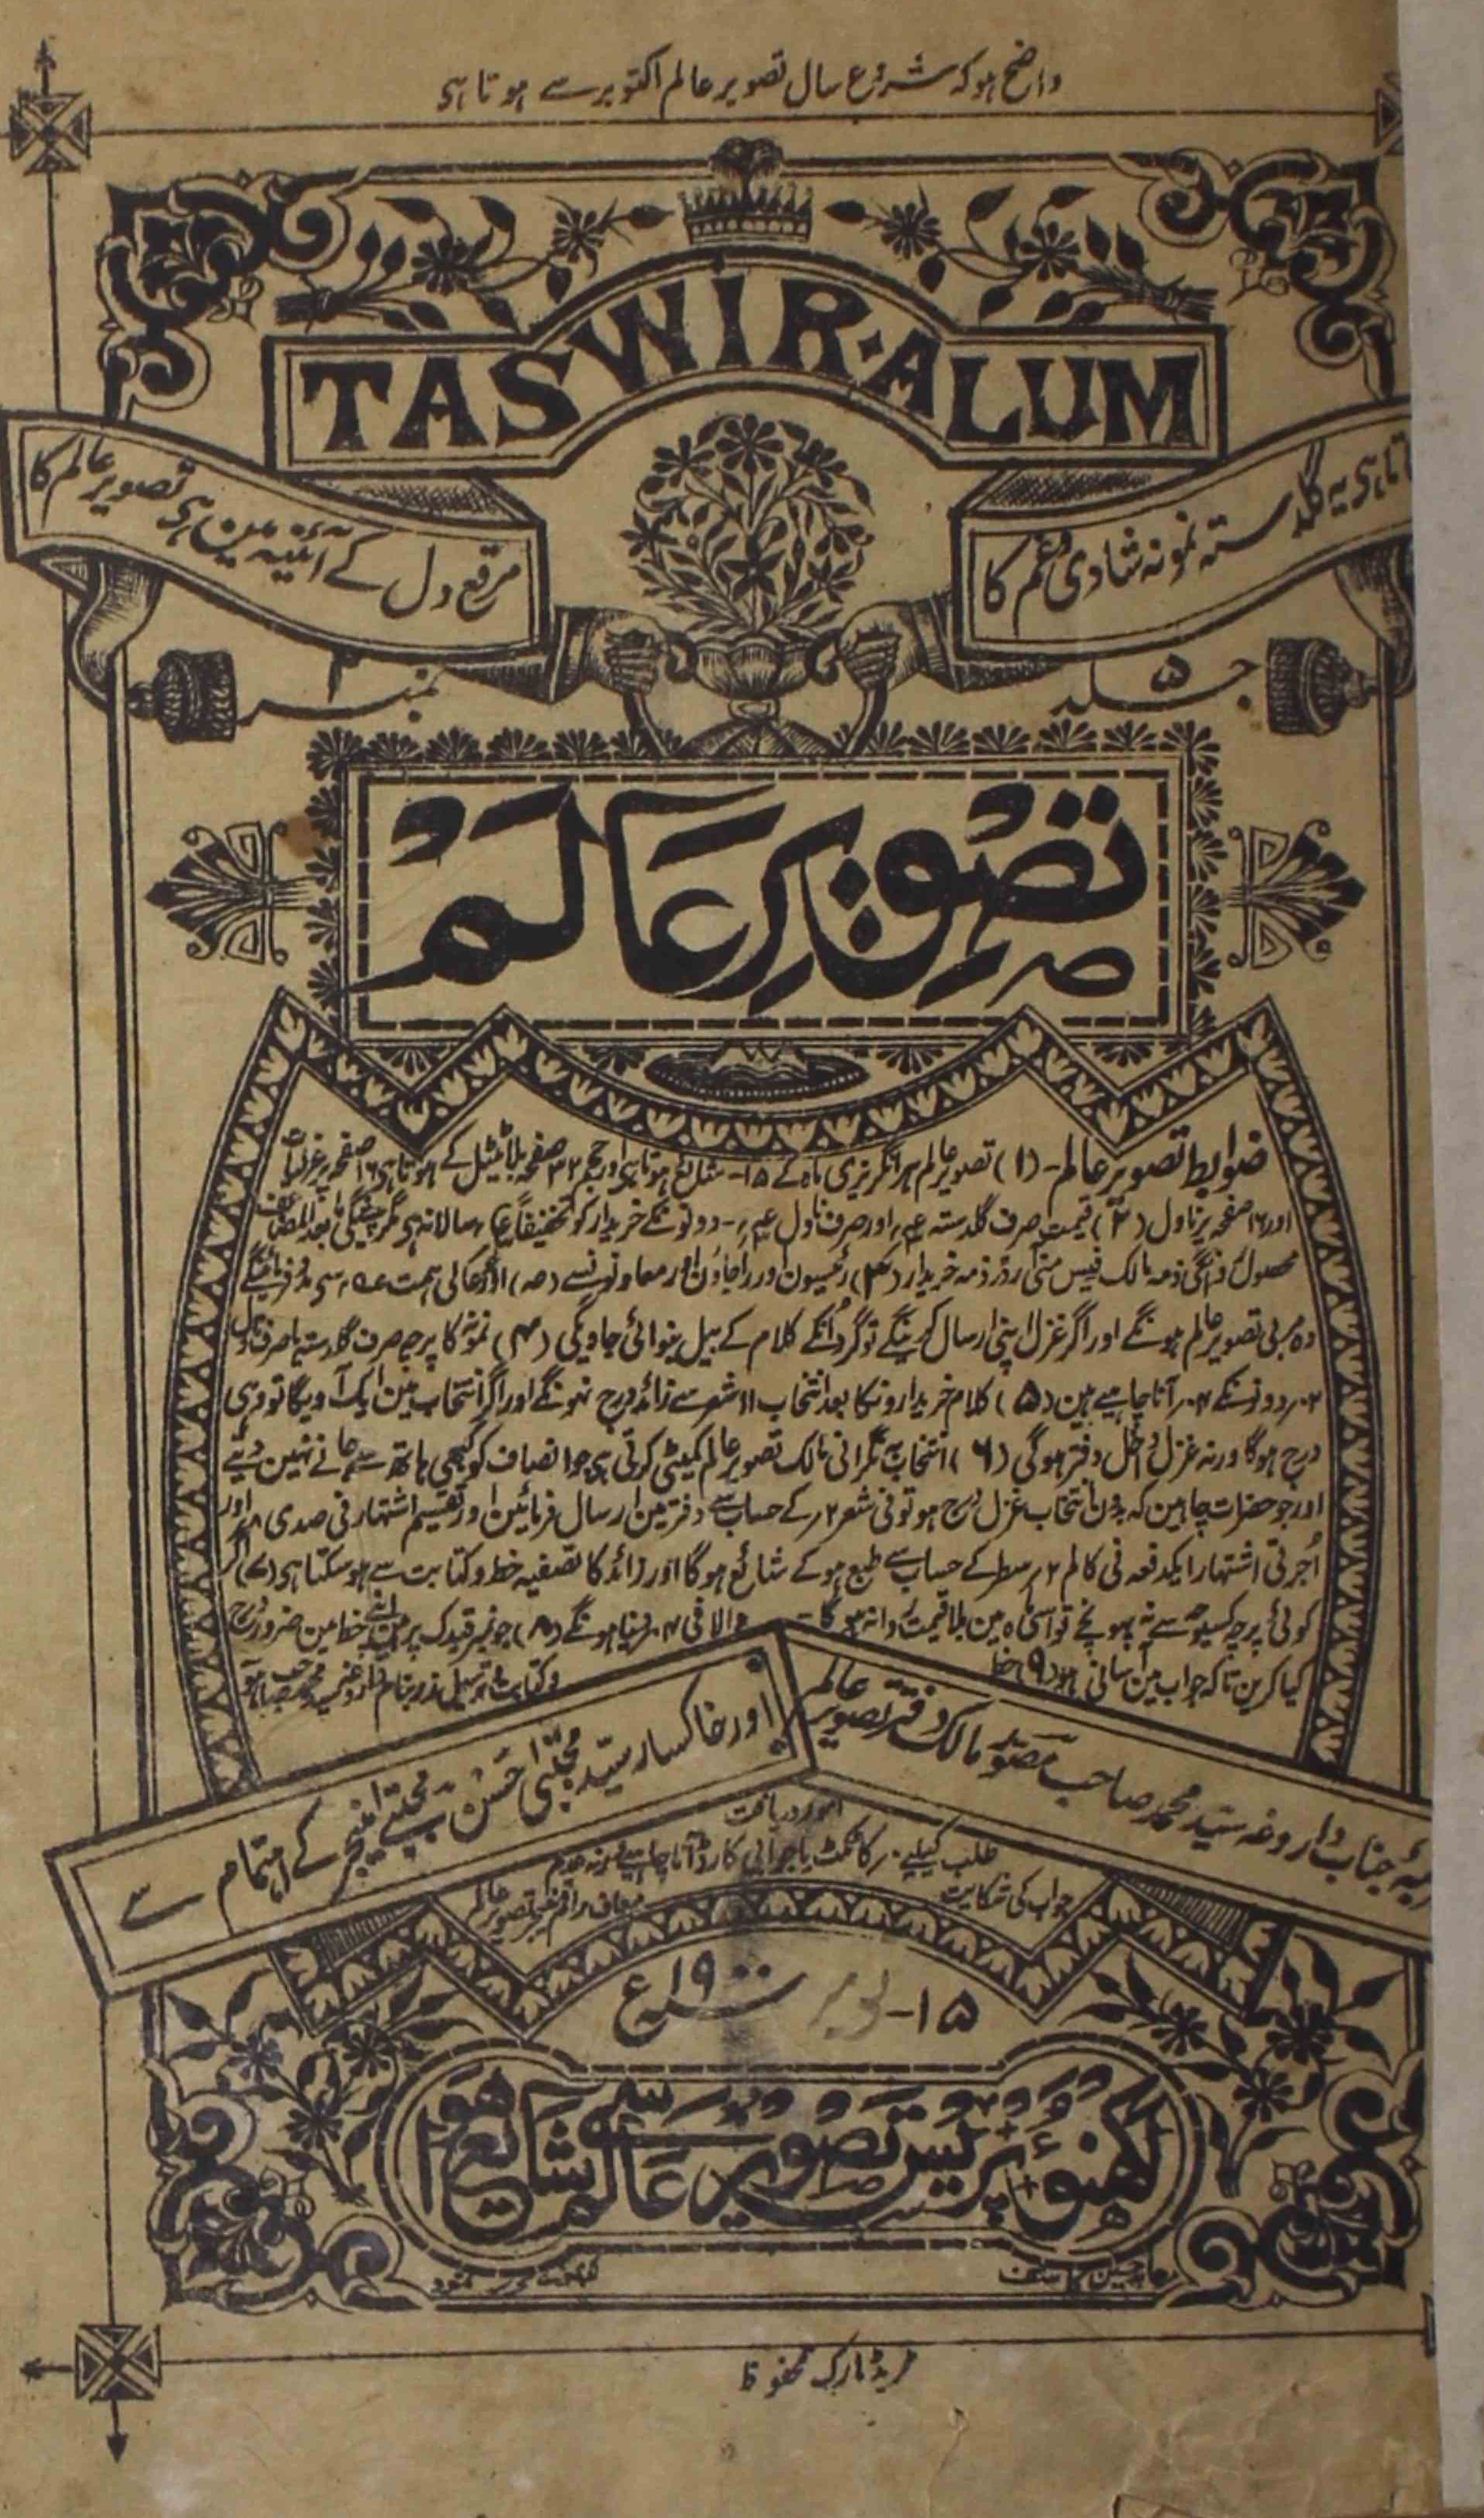 tasweer-e-alam-shumara-number-002-darogha-syed-mohammad-magazines